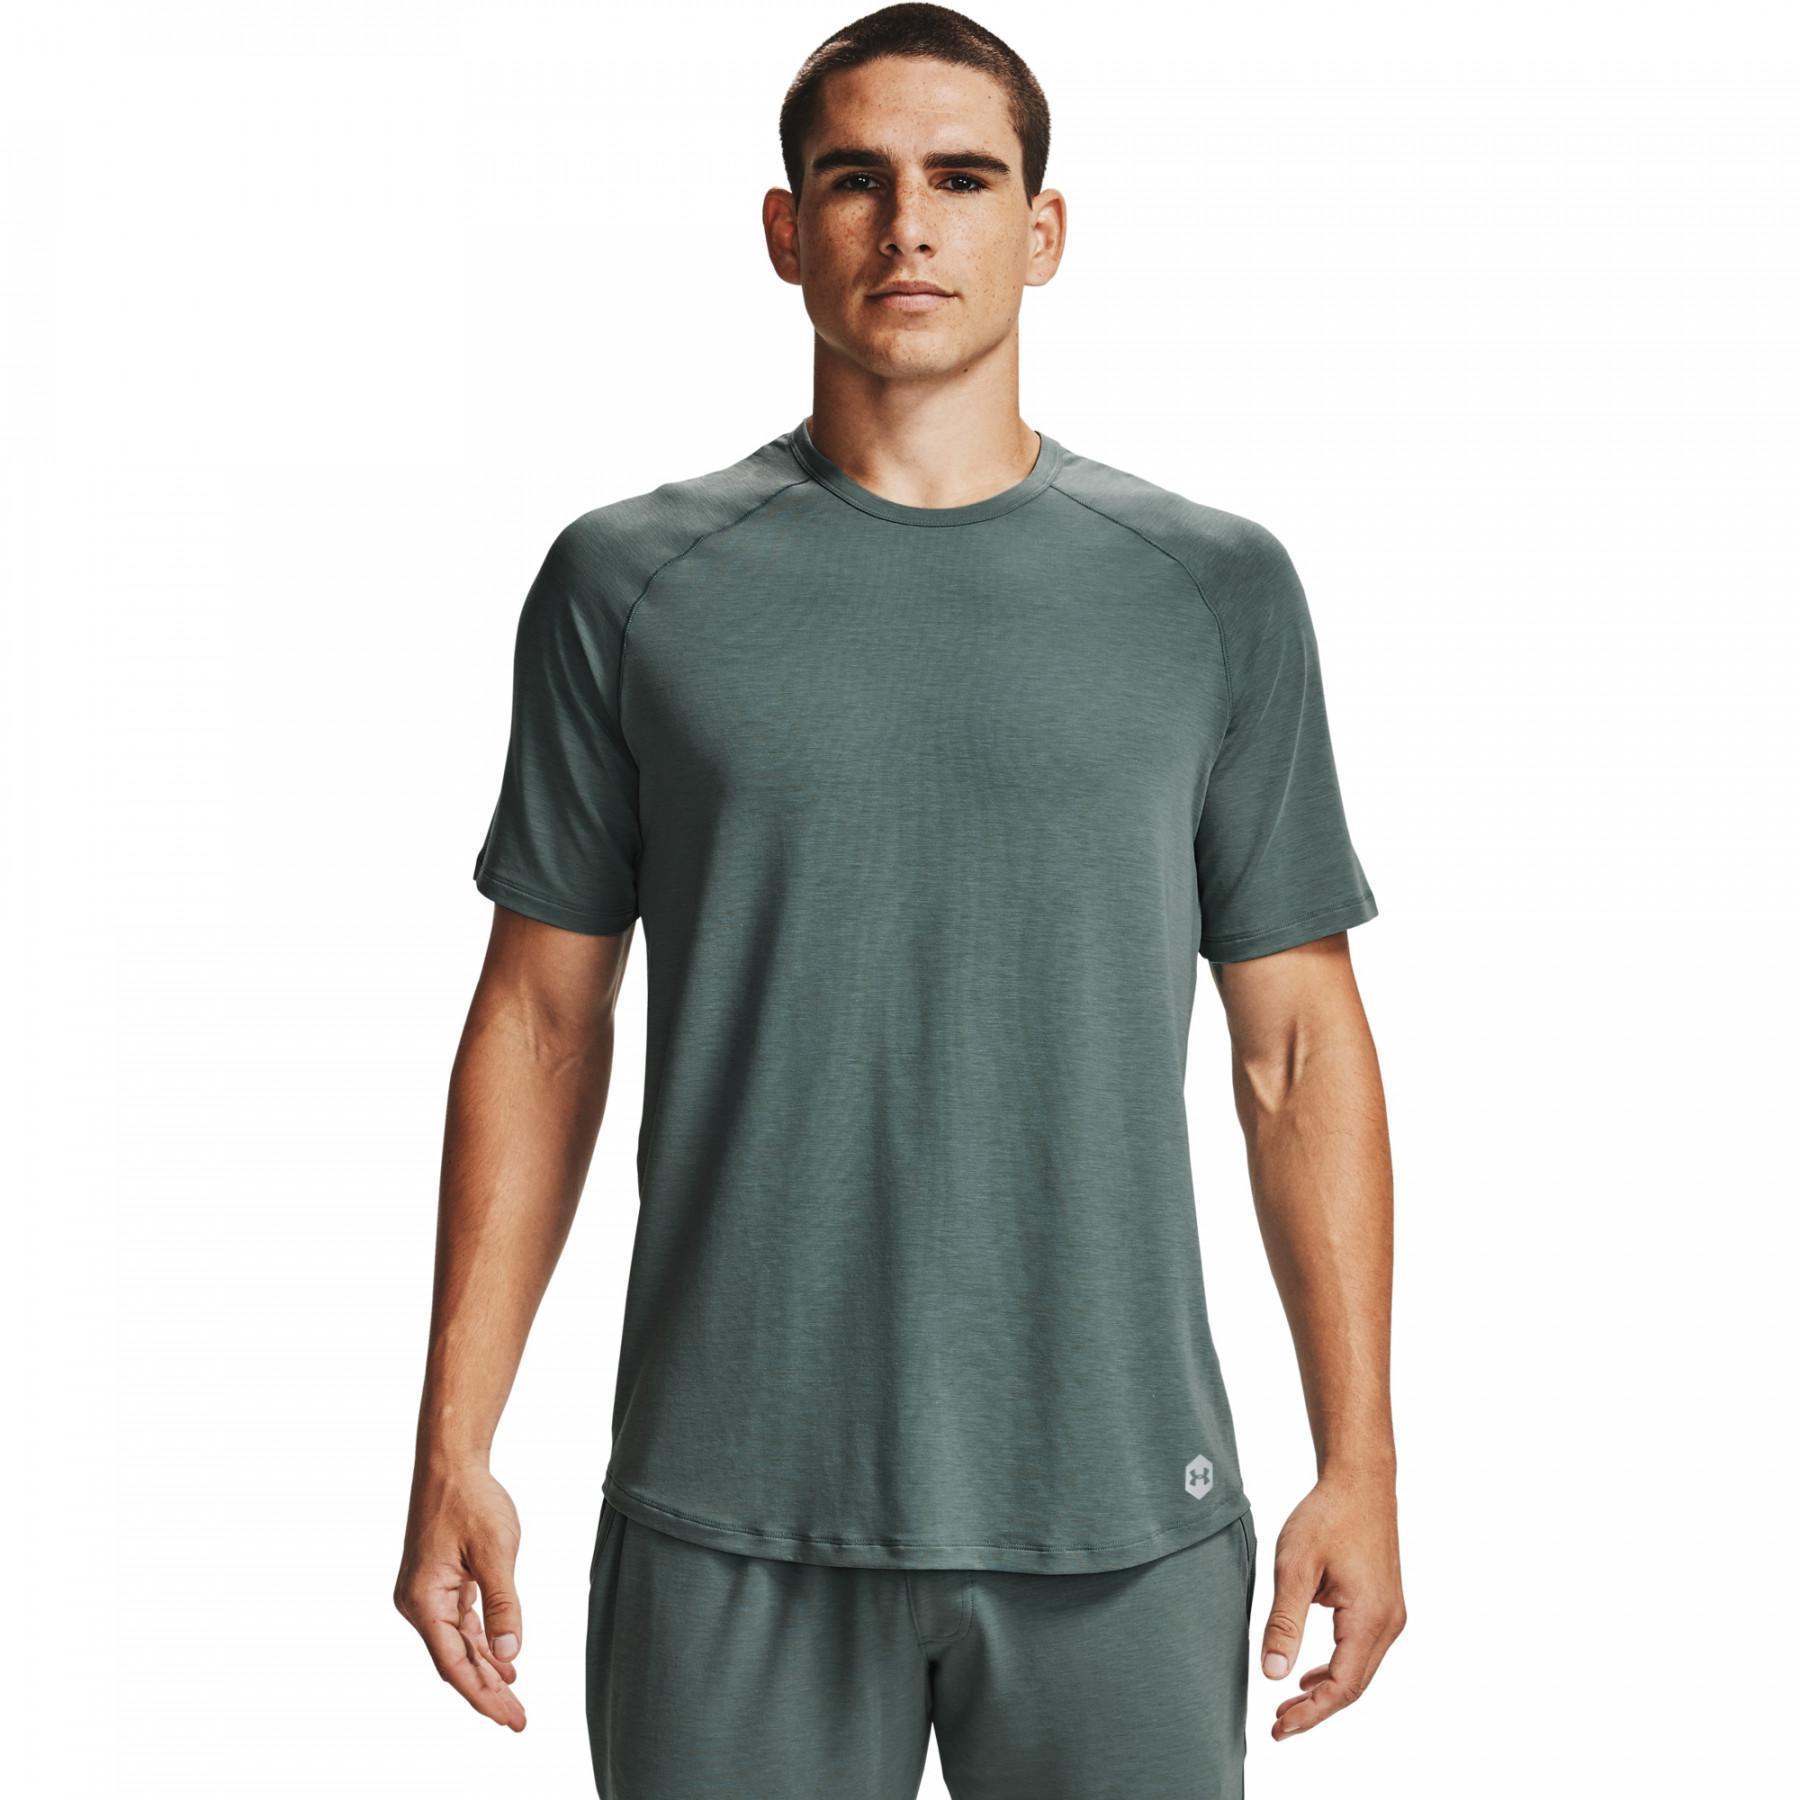 Crew neck t-shirt athlete Under Armour Recovery Sleepwear